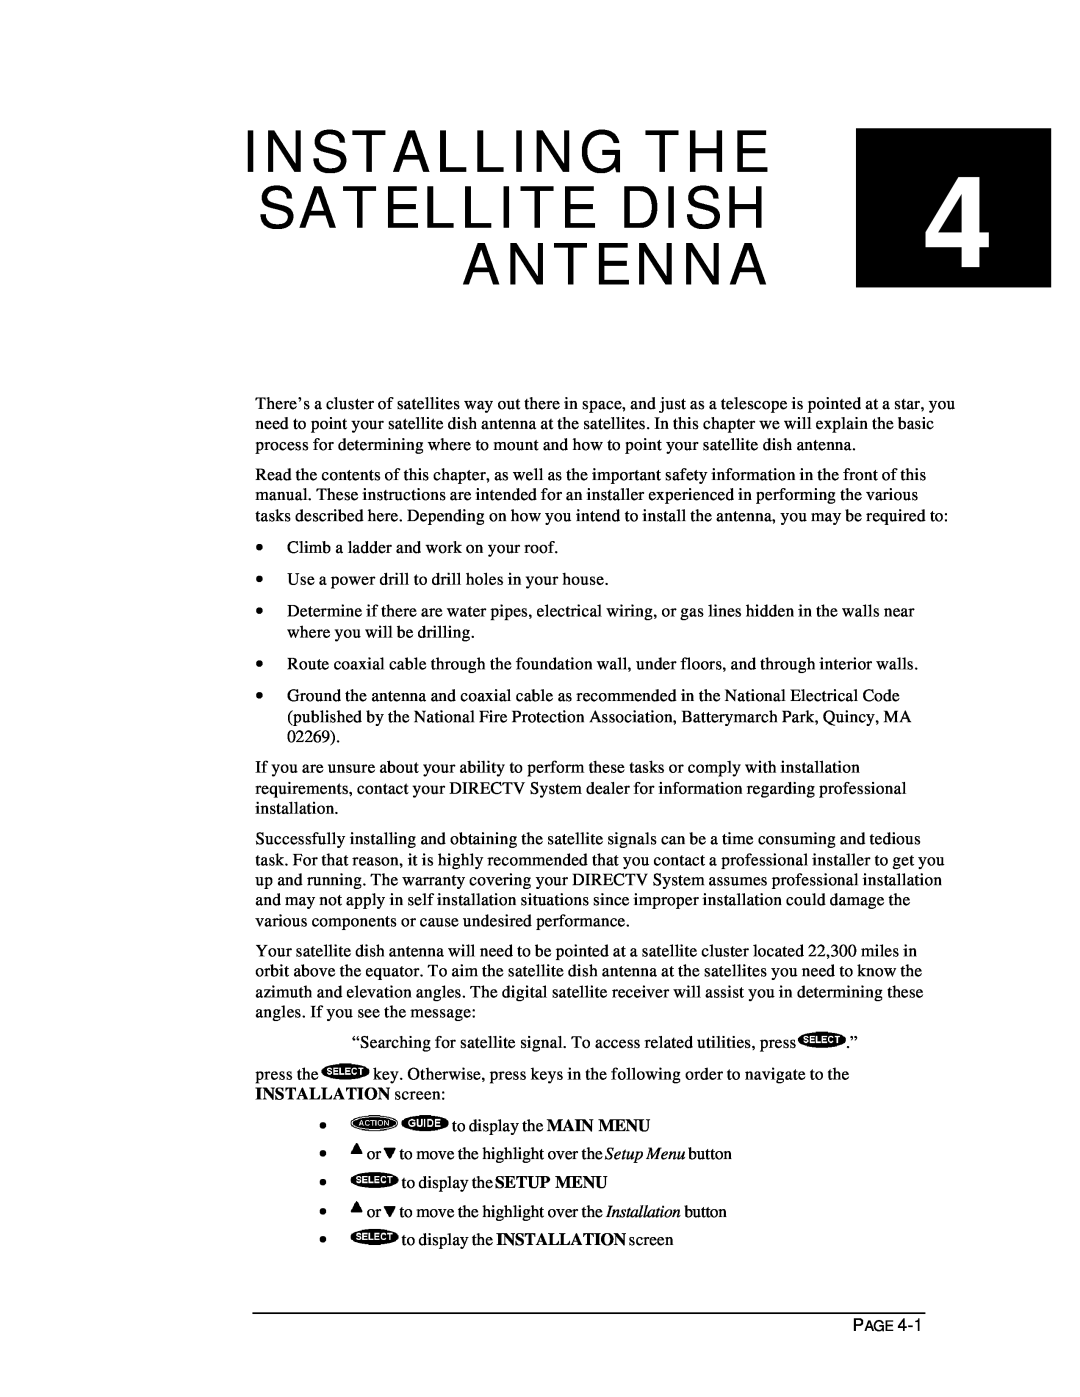 DirecTV HIRD-D11, HIRD-D01 owner manual Installing The Satellite Dish Antenna 